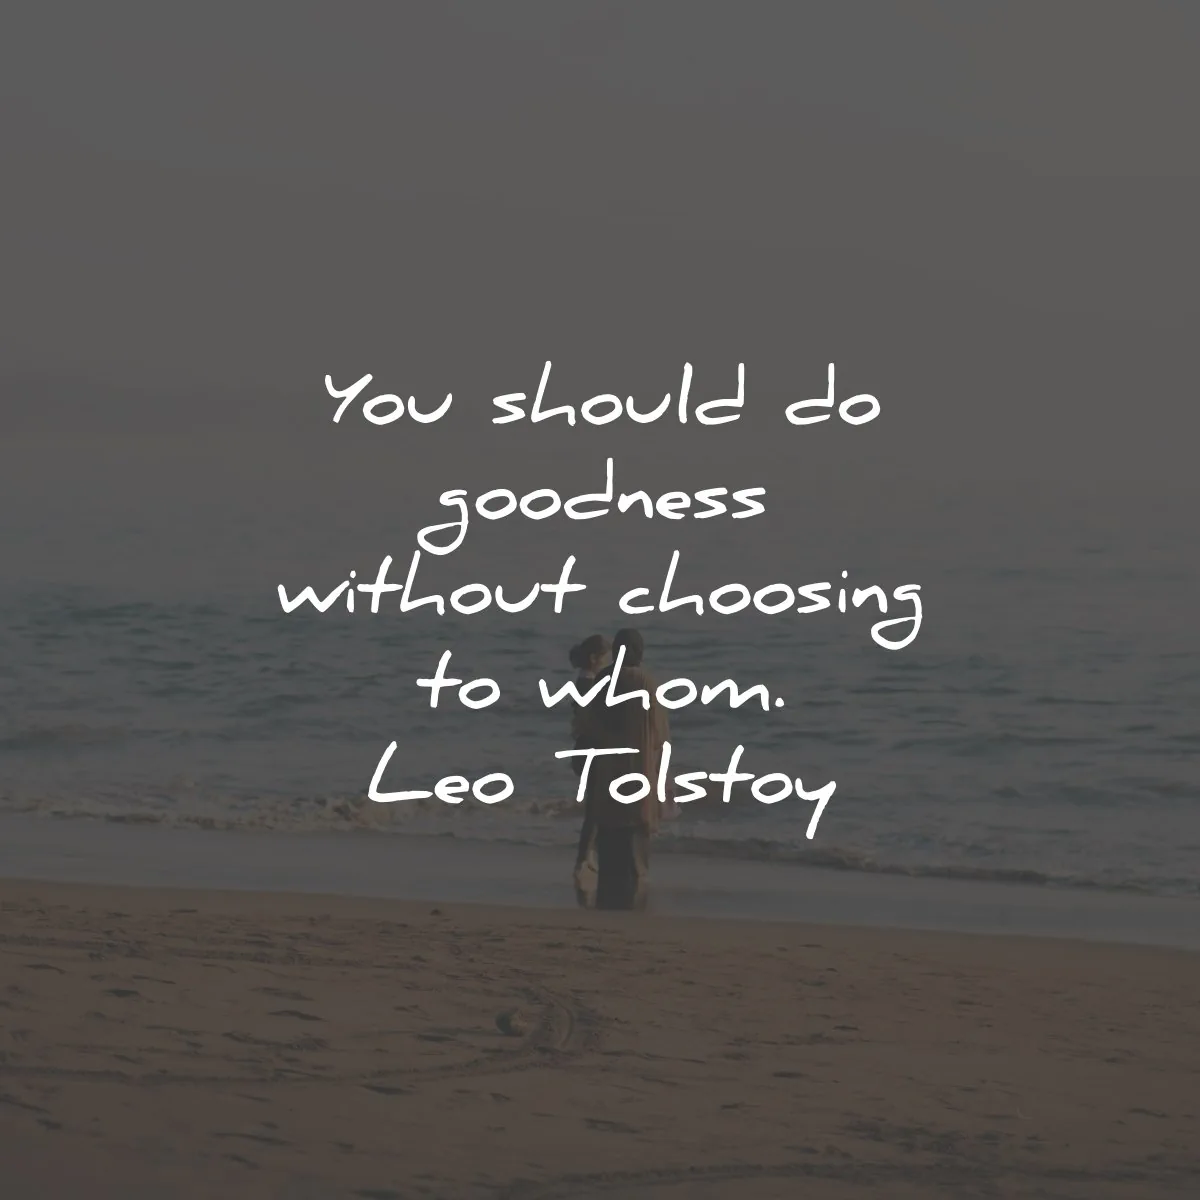 leo tolstoy quotes should goodness choosing wisdom